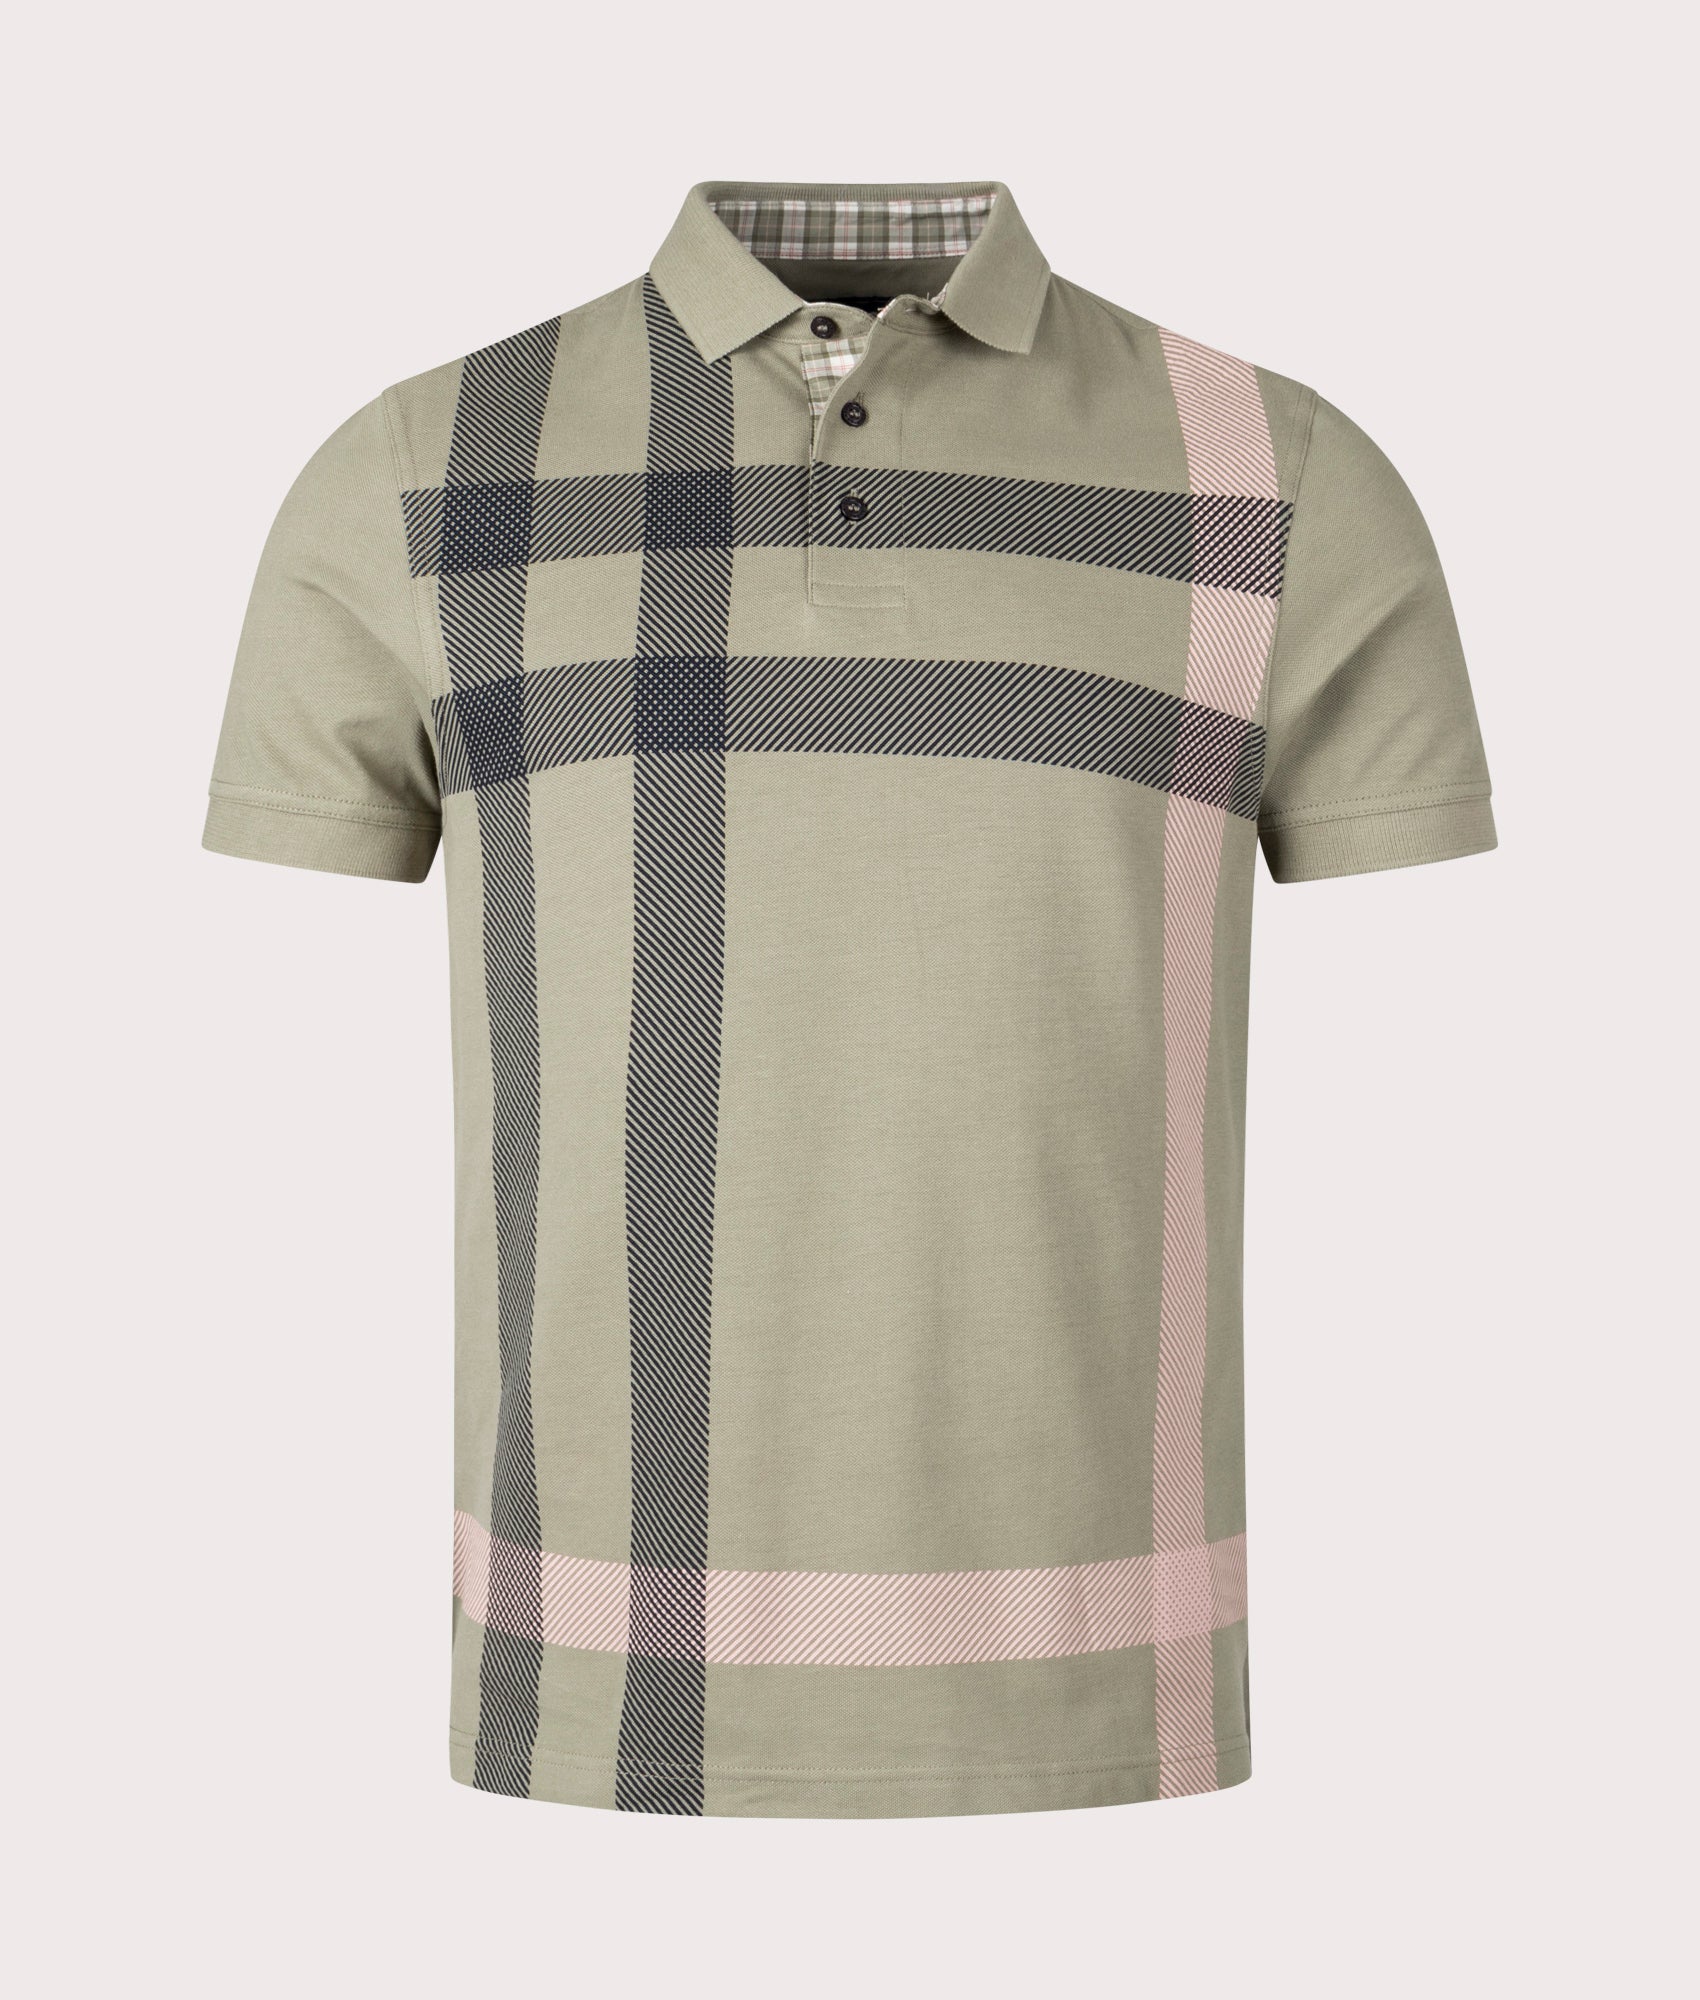 Barbour Lifestyle Mens Blaine Polo Shirt - Colour: OL38 Dusty Green - Size: Medium